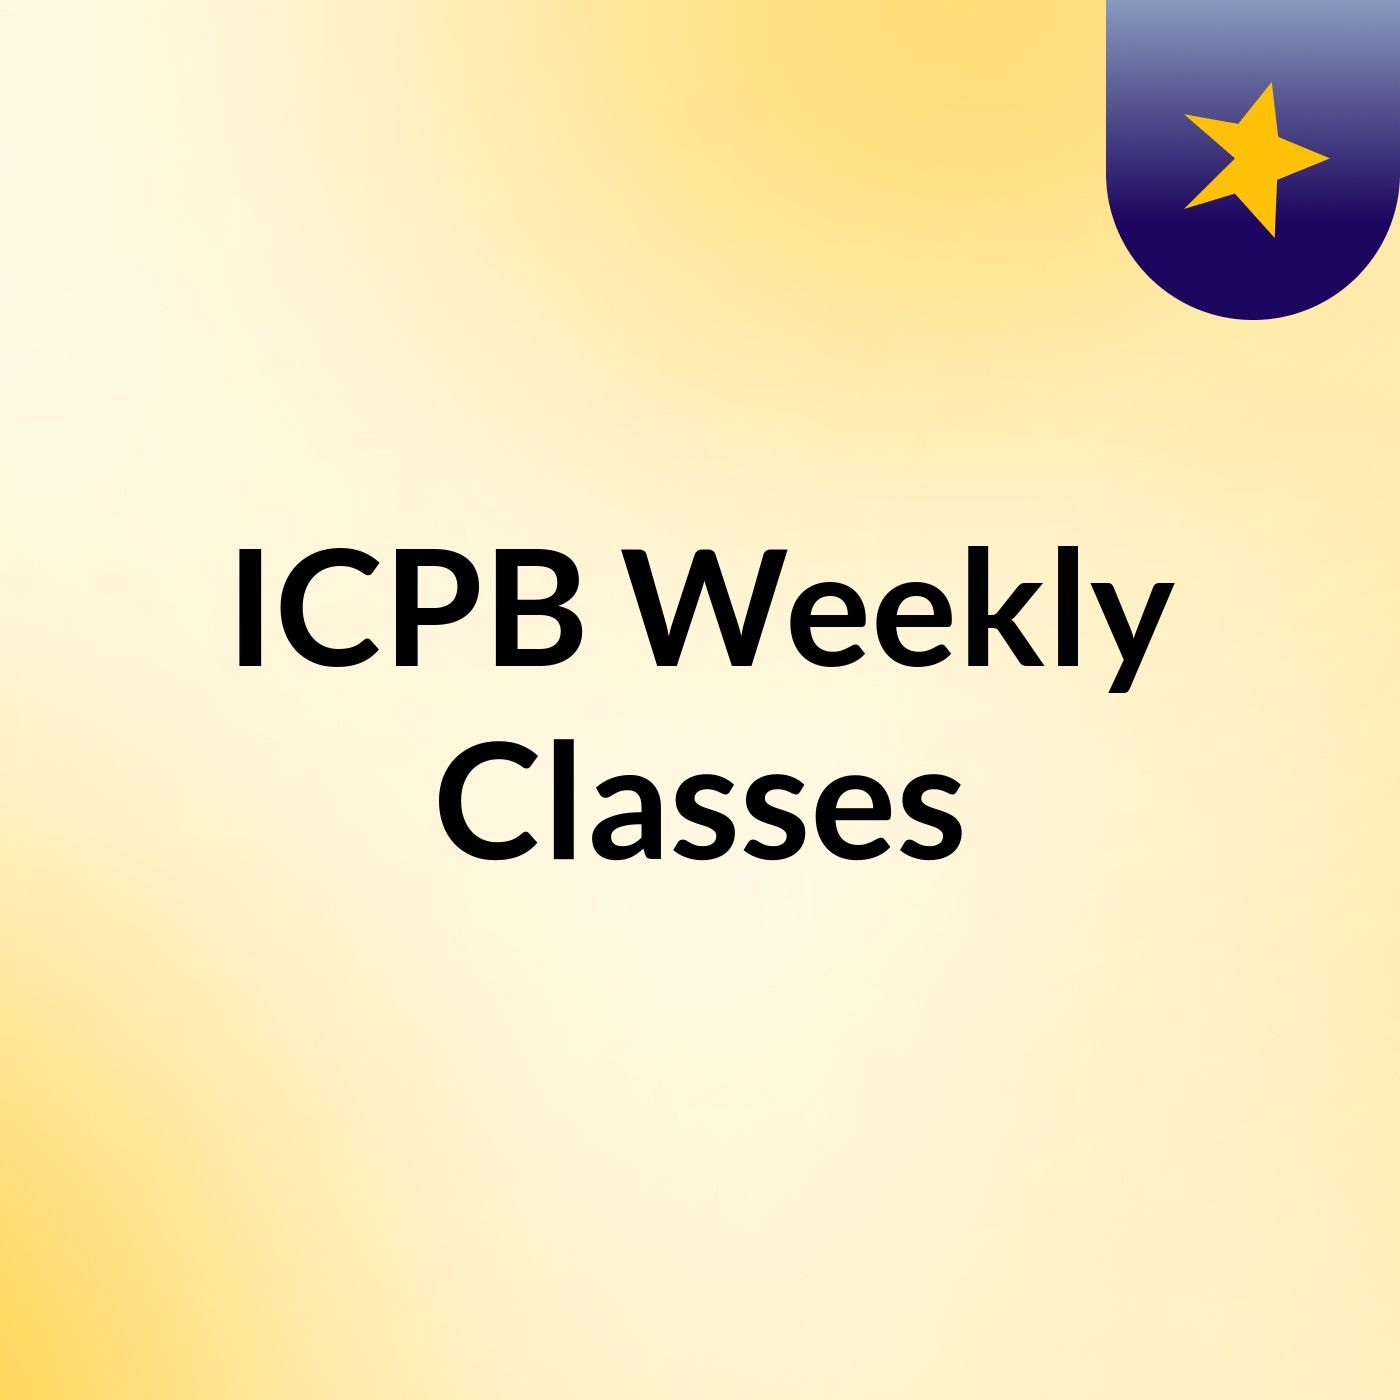 ICPB Weekly Classes